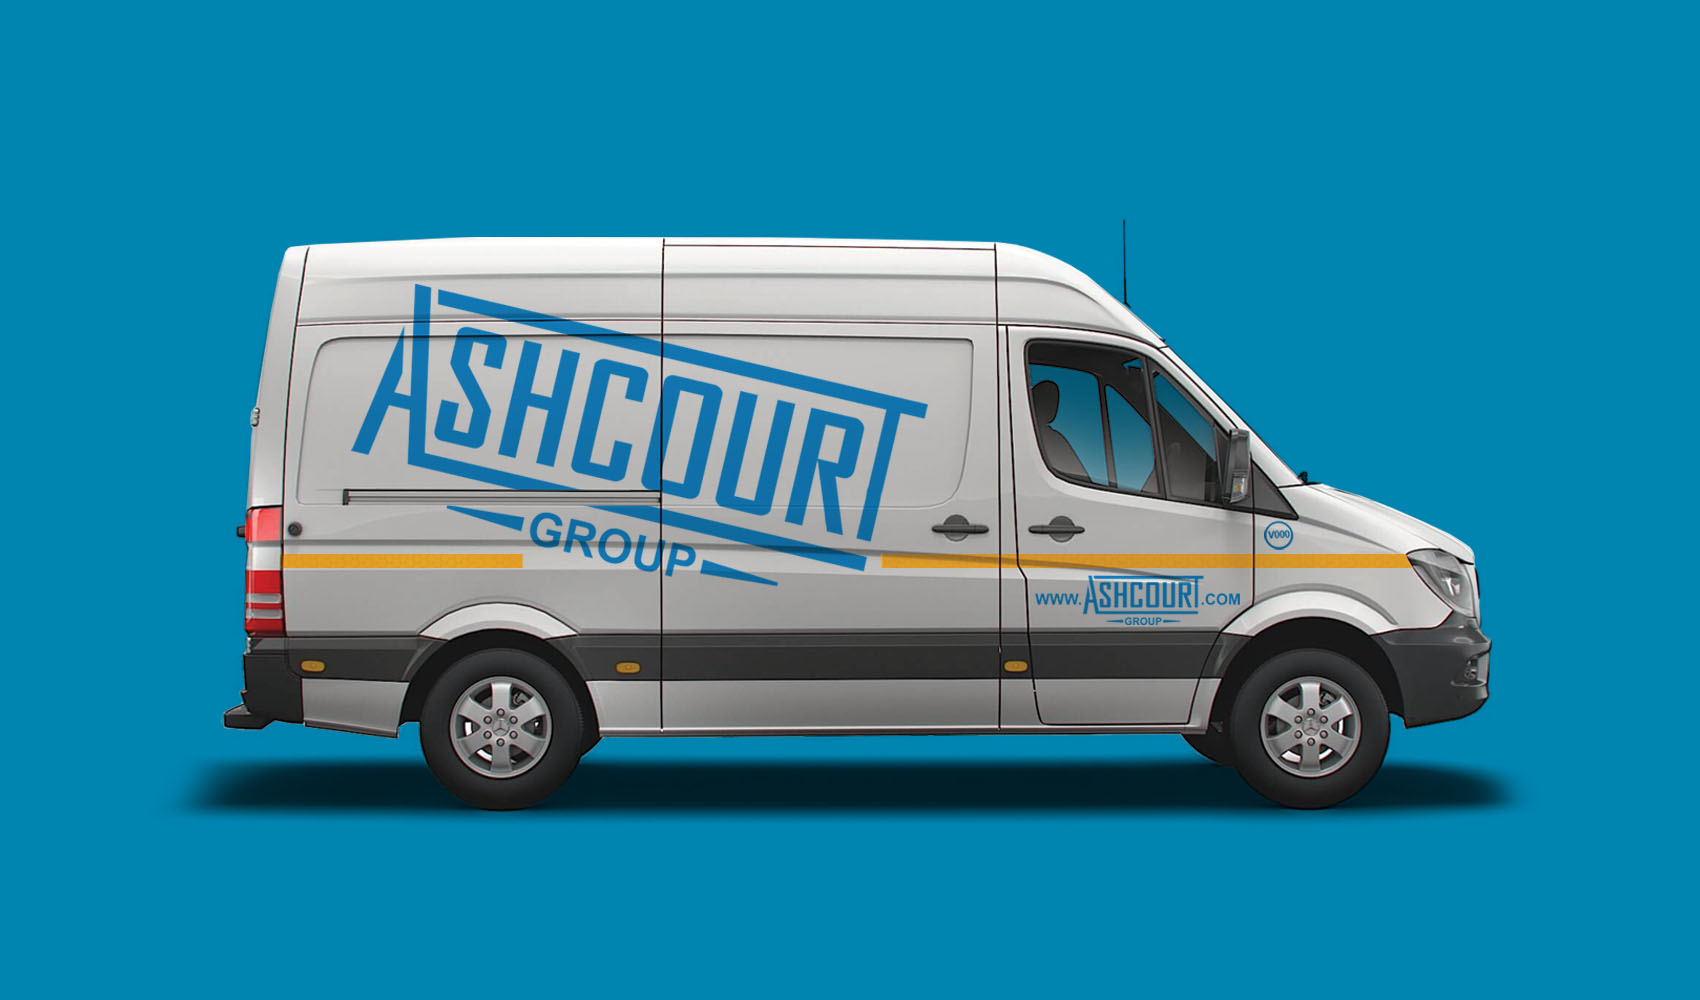 Ashcourt Group concept van livery.